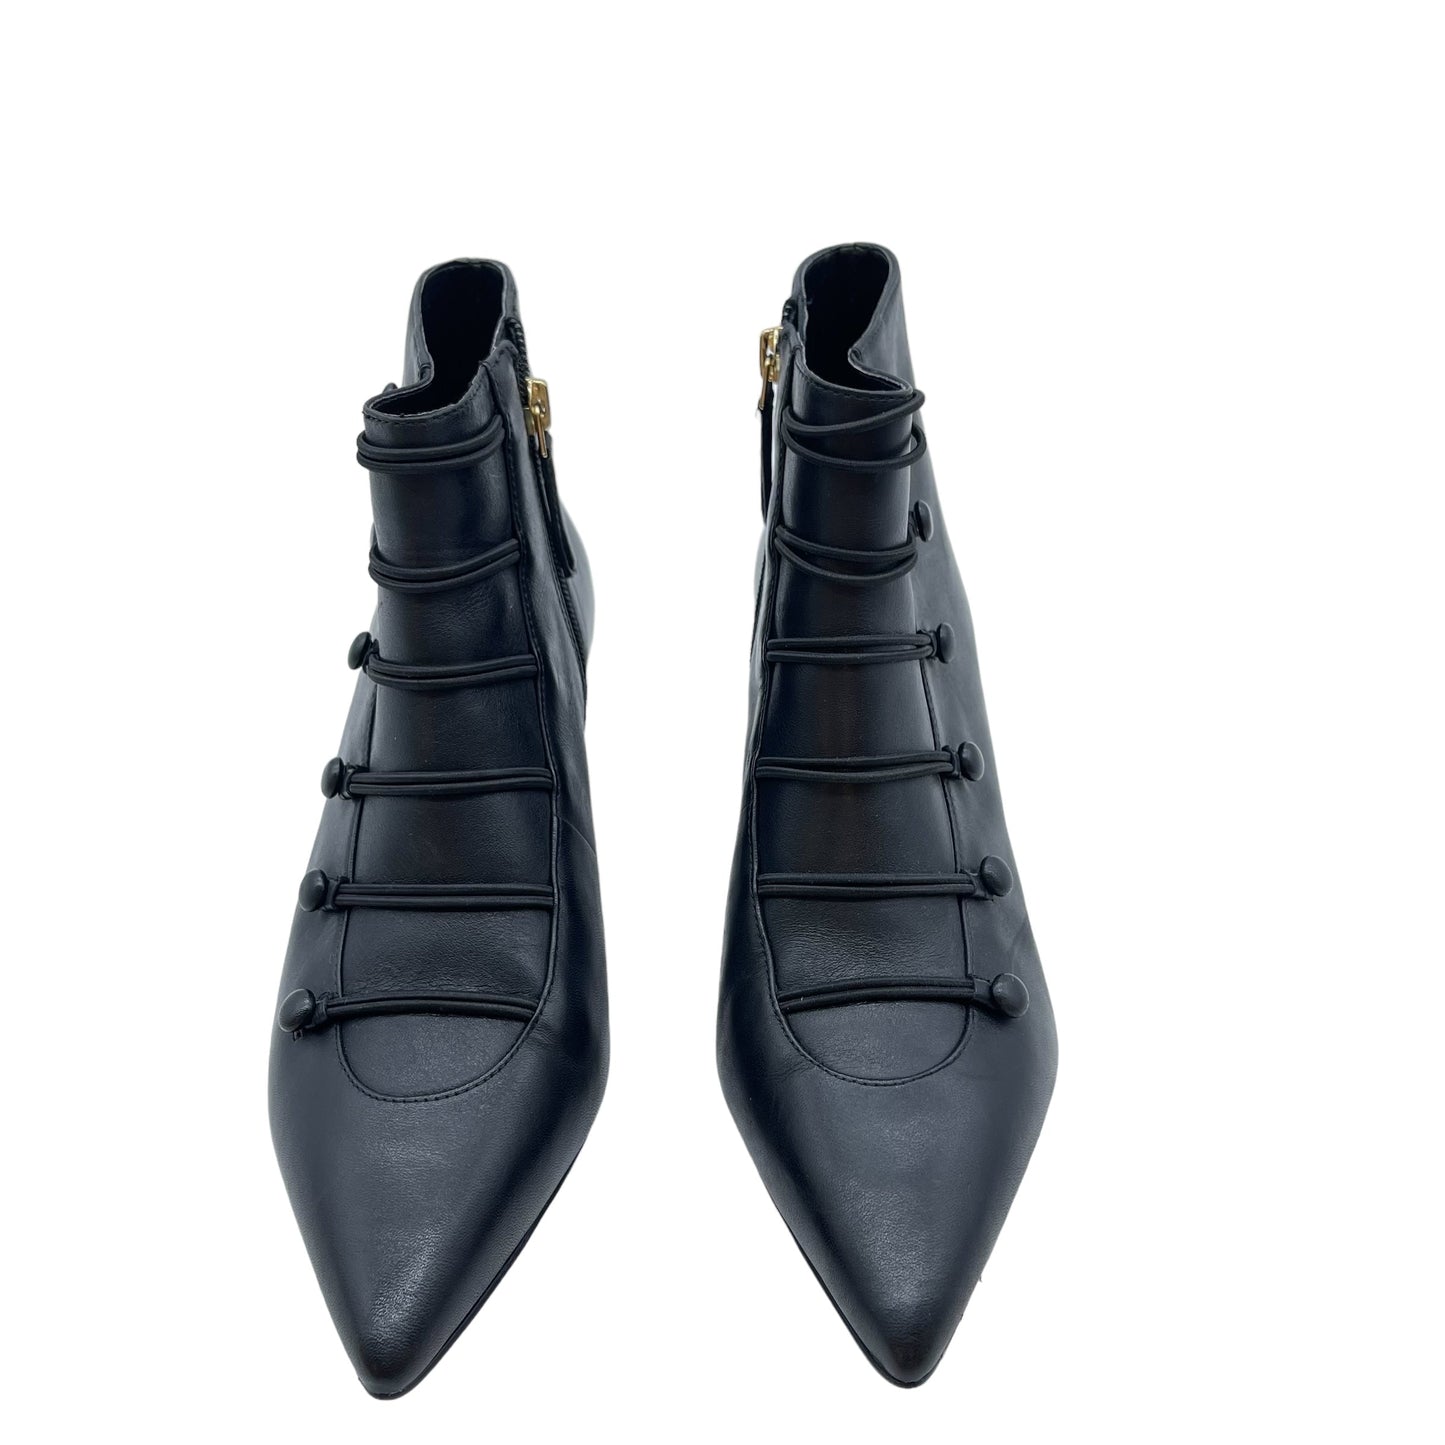 Black Boots Ankle Heels Nine West, Size 7.5